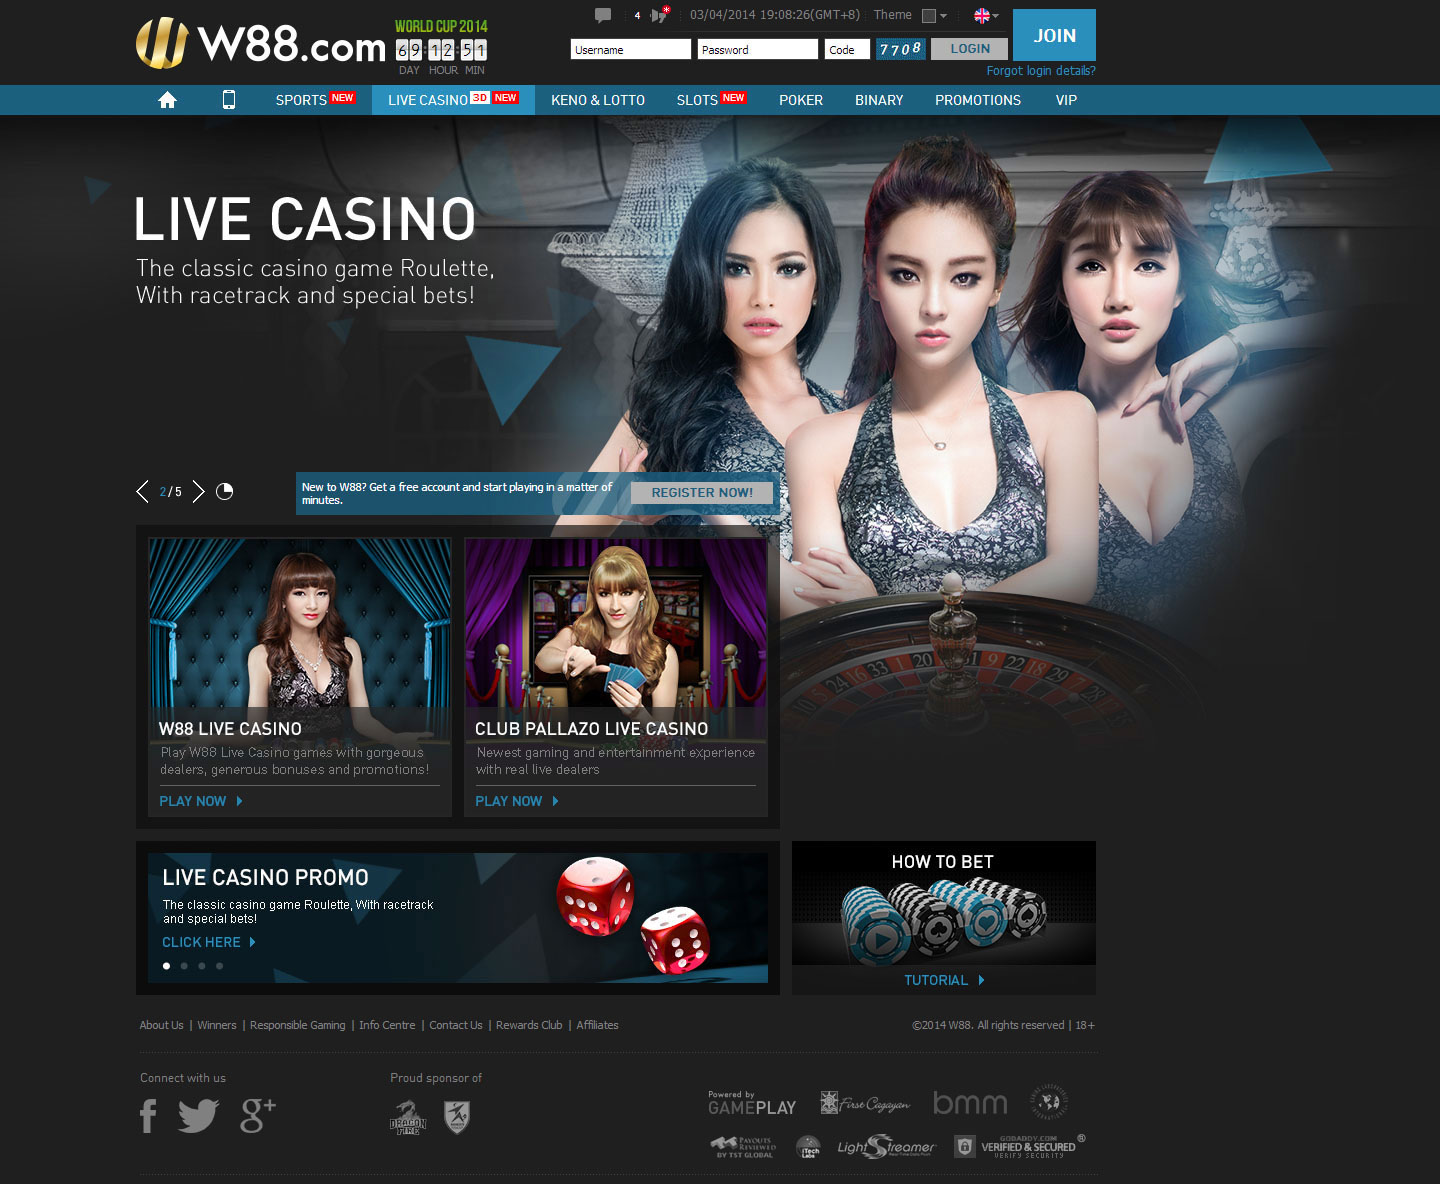 Unlim casino промо спины unlim kazino xyz. Web казино. Веб казино. Casino website. Game Casino web Design.